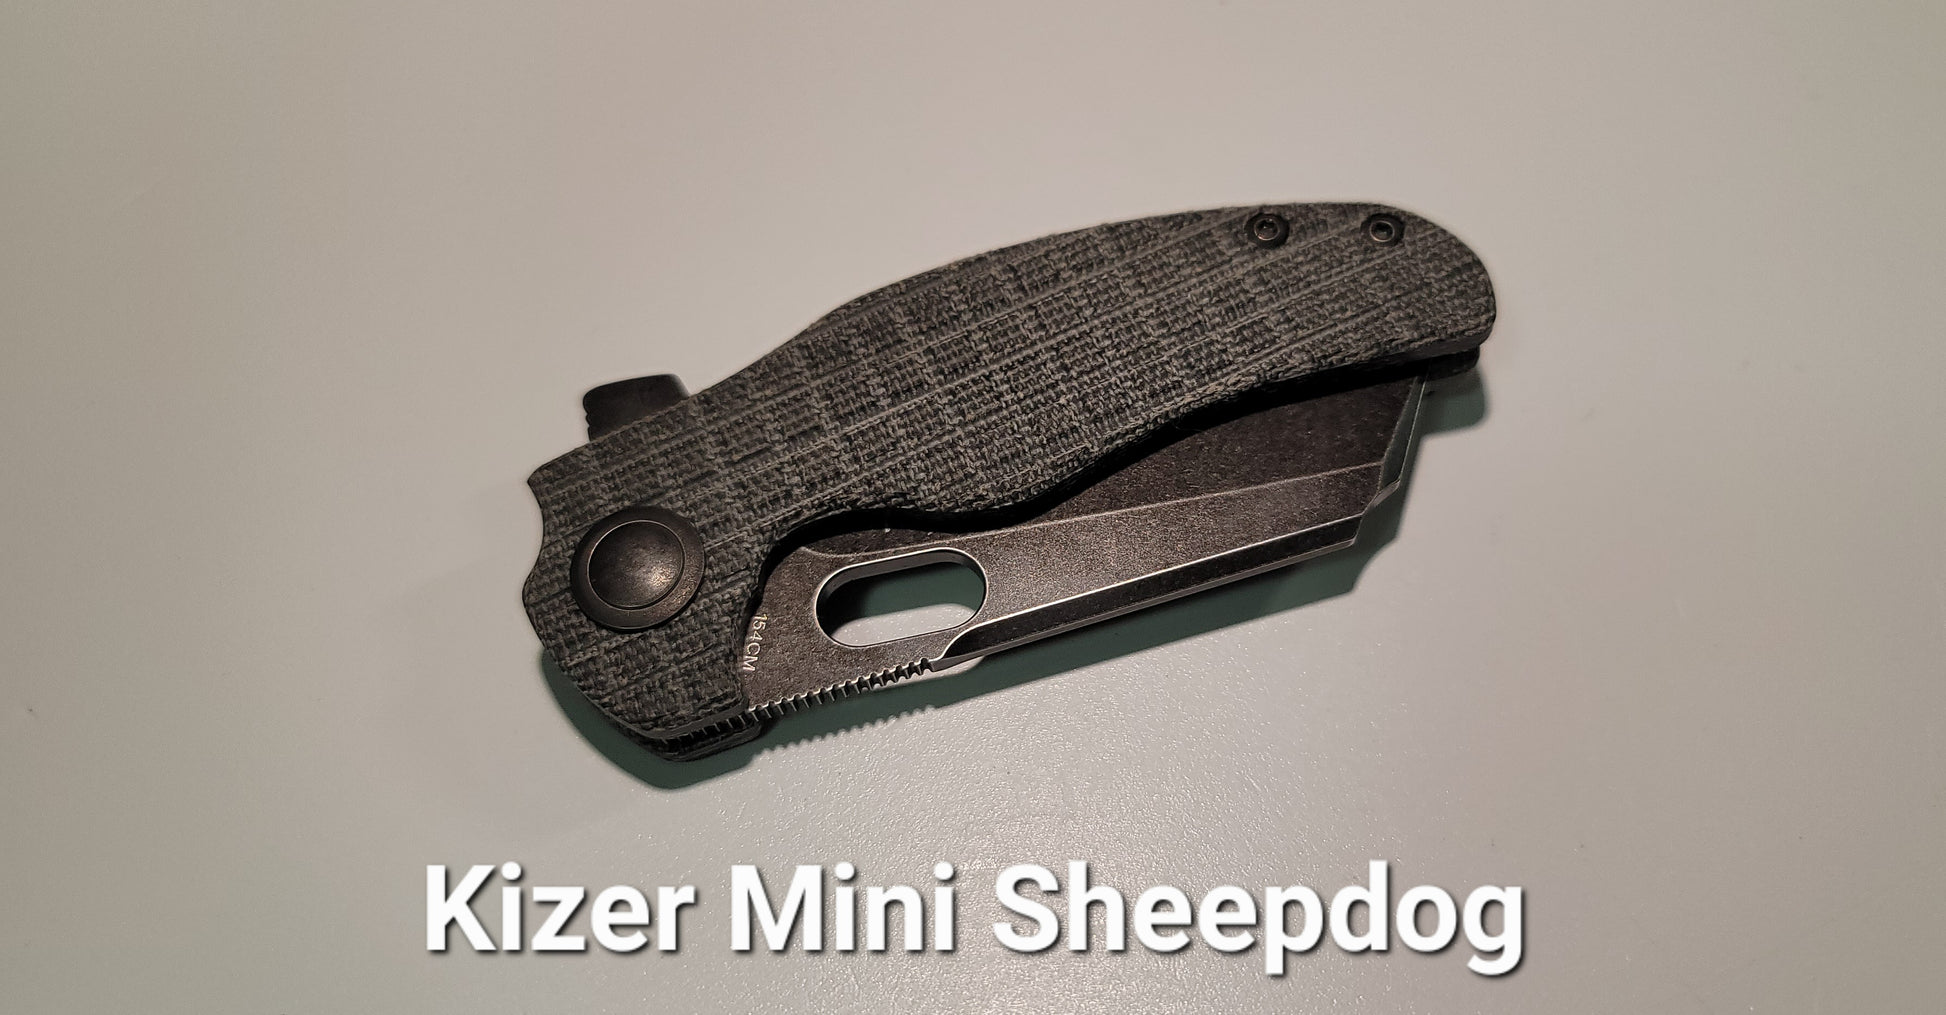 KizerXRey Exclusive Sheepdog C01c FRAG Micarta limited edition